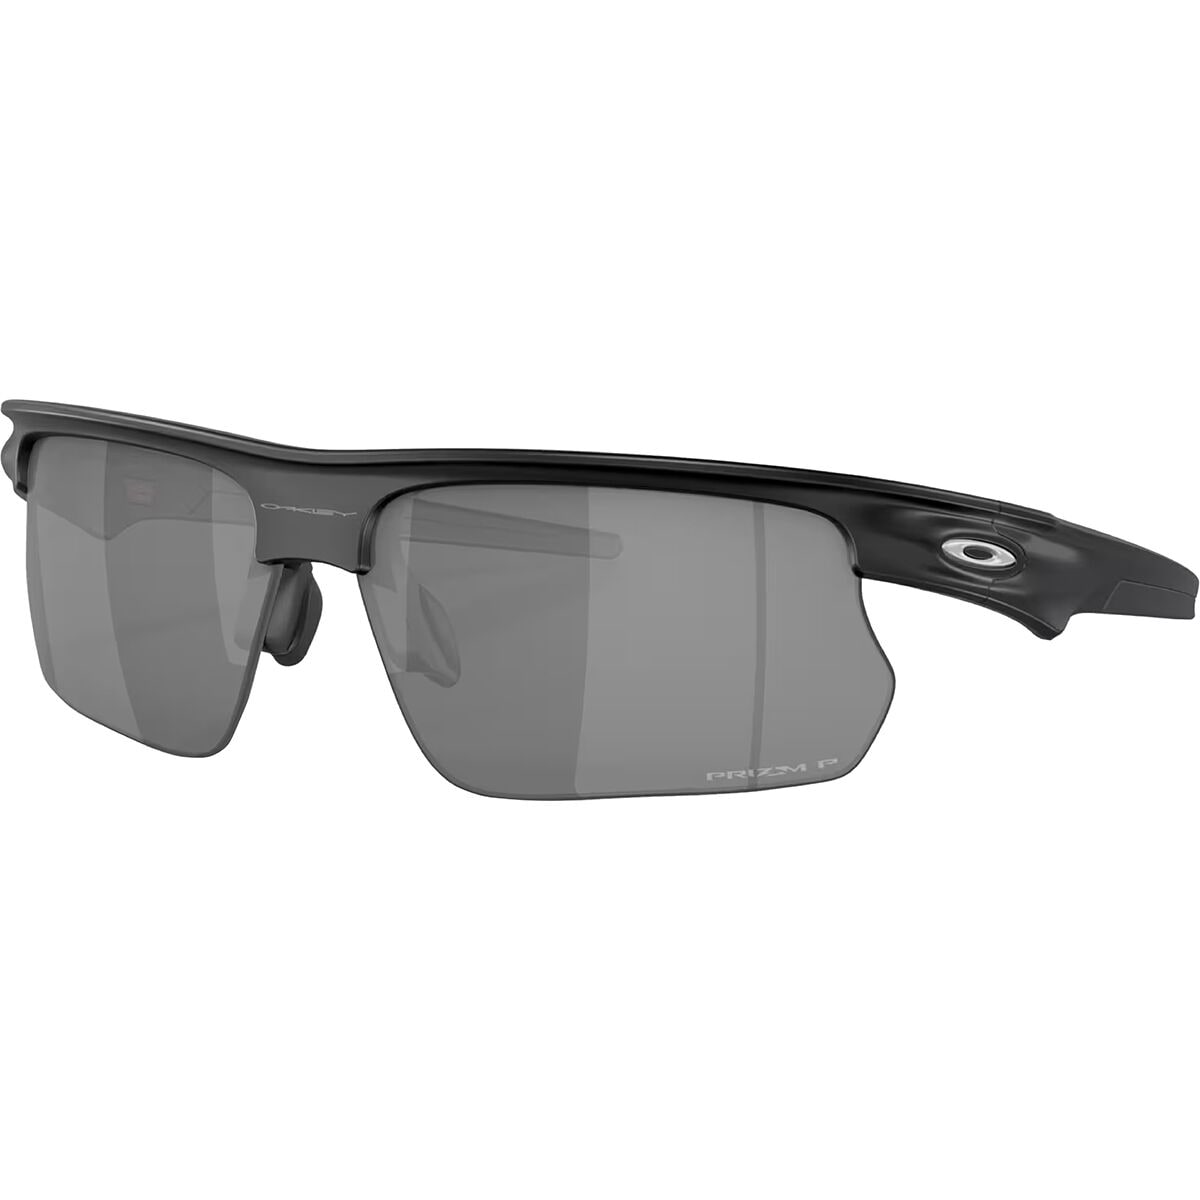 Bisphaera Photochromic Sunglasses Oakley